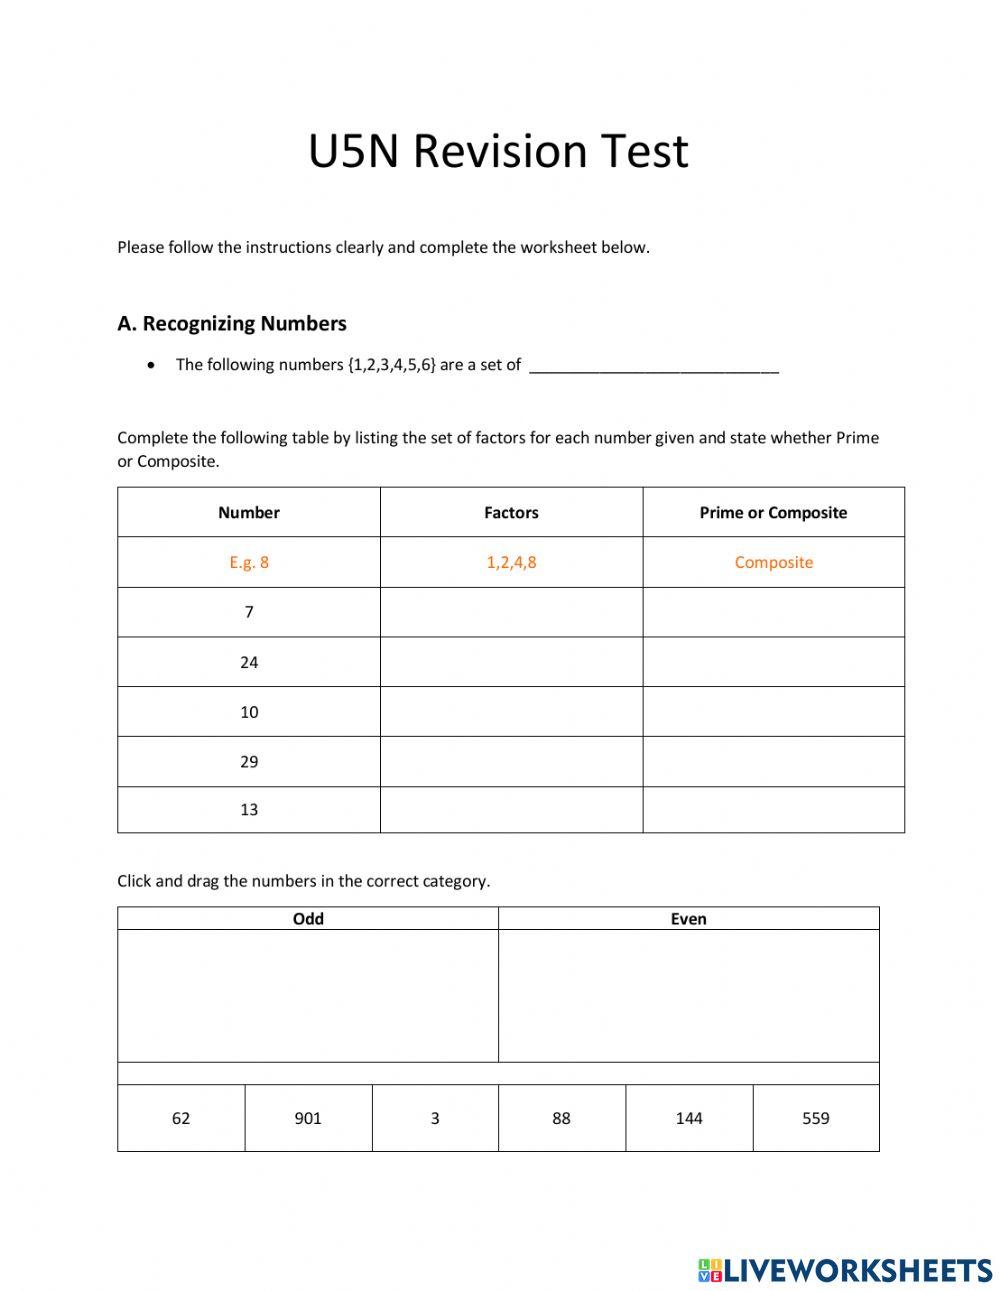 U5N Revision Test